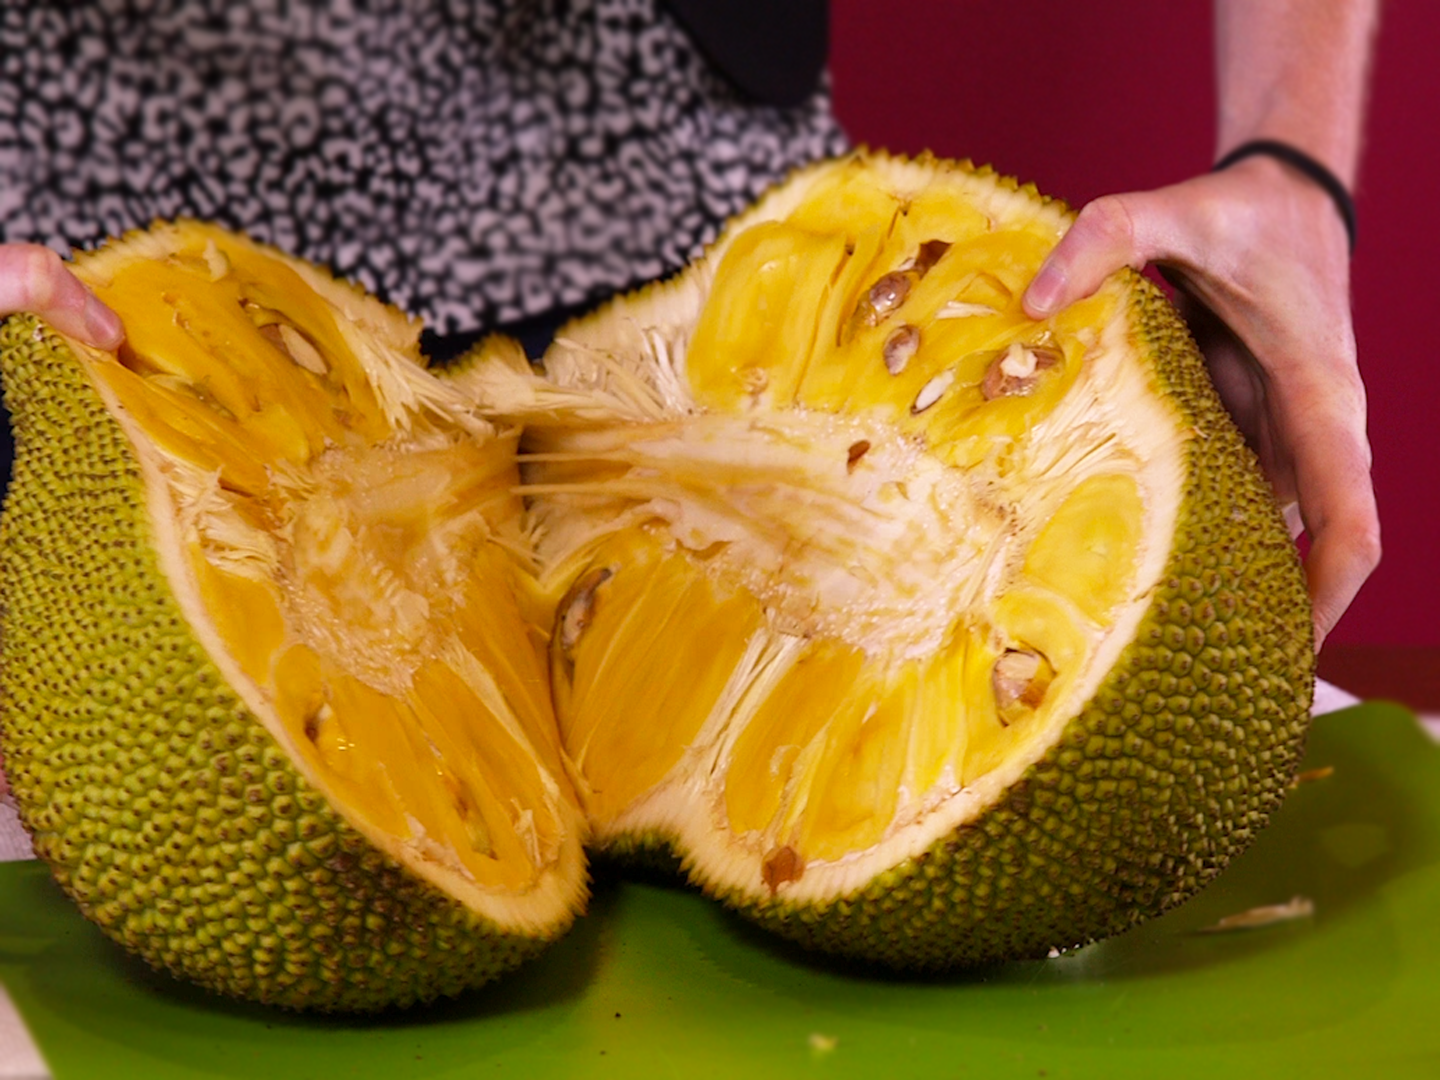 we-tried-jackfruit--the-huge-tree-fruit-that-supposedly-tastes-like-pulled-pork.jpg